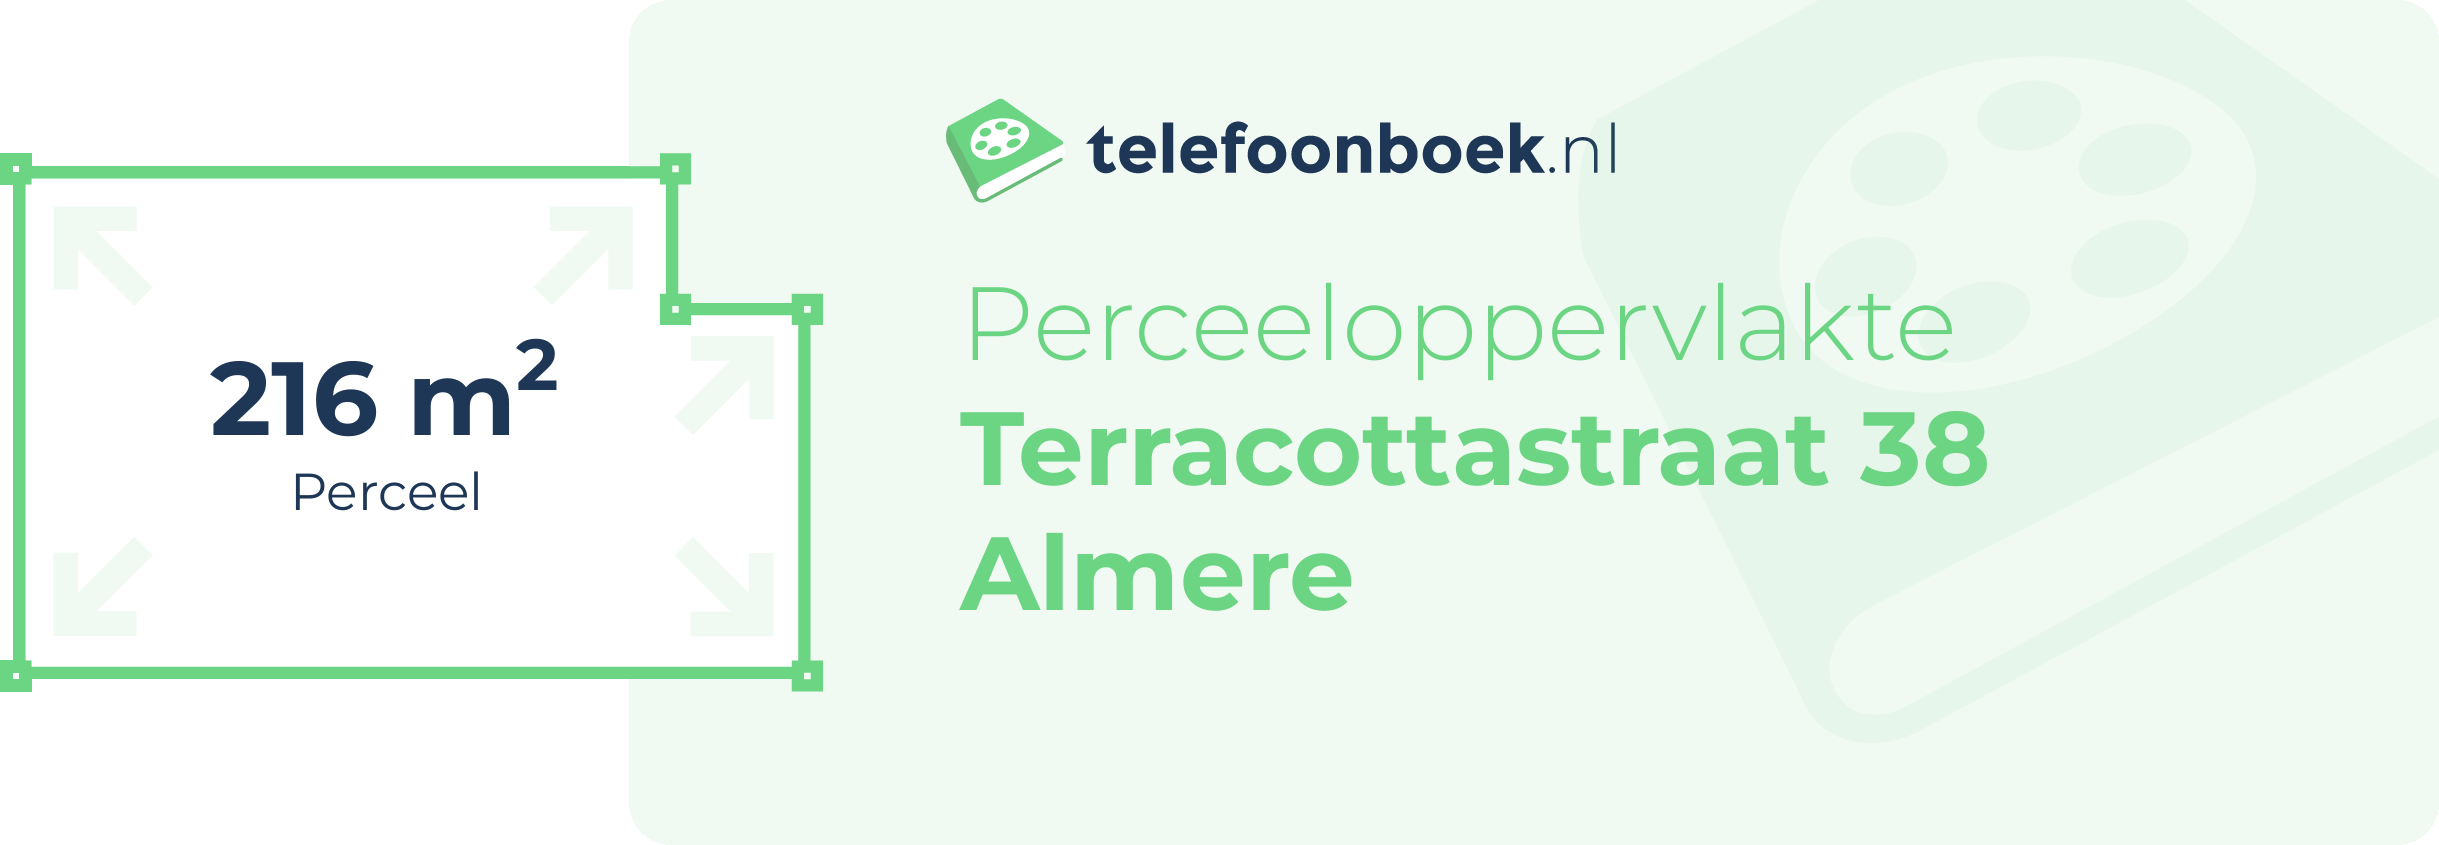 Perceeloppervlakte Terracottastraat 38 Almere